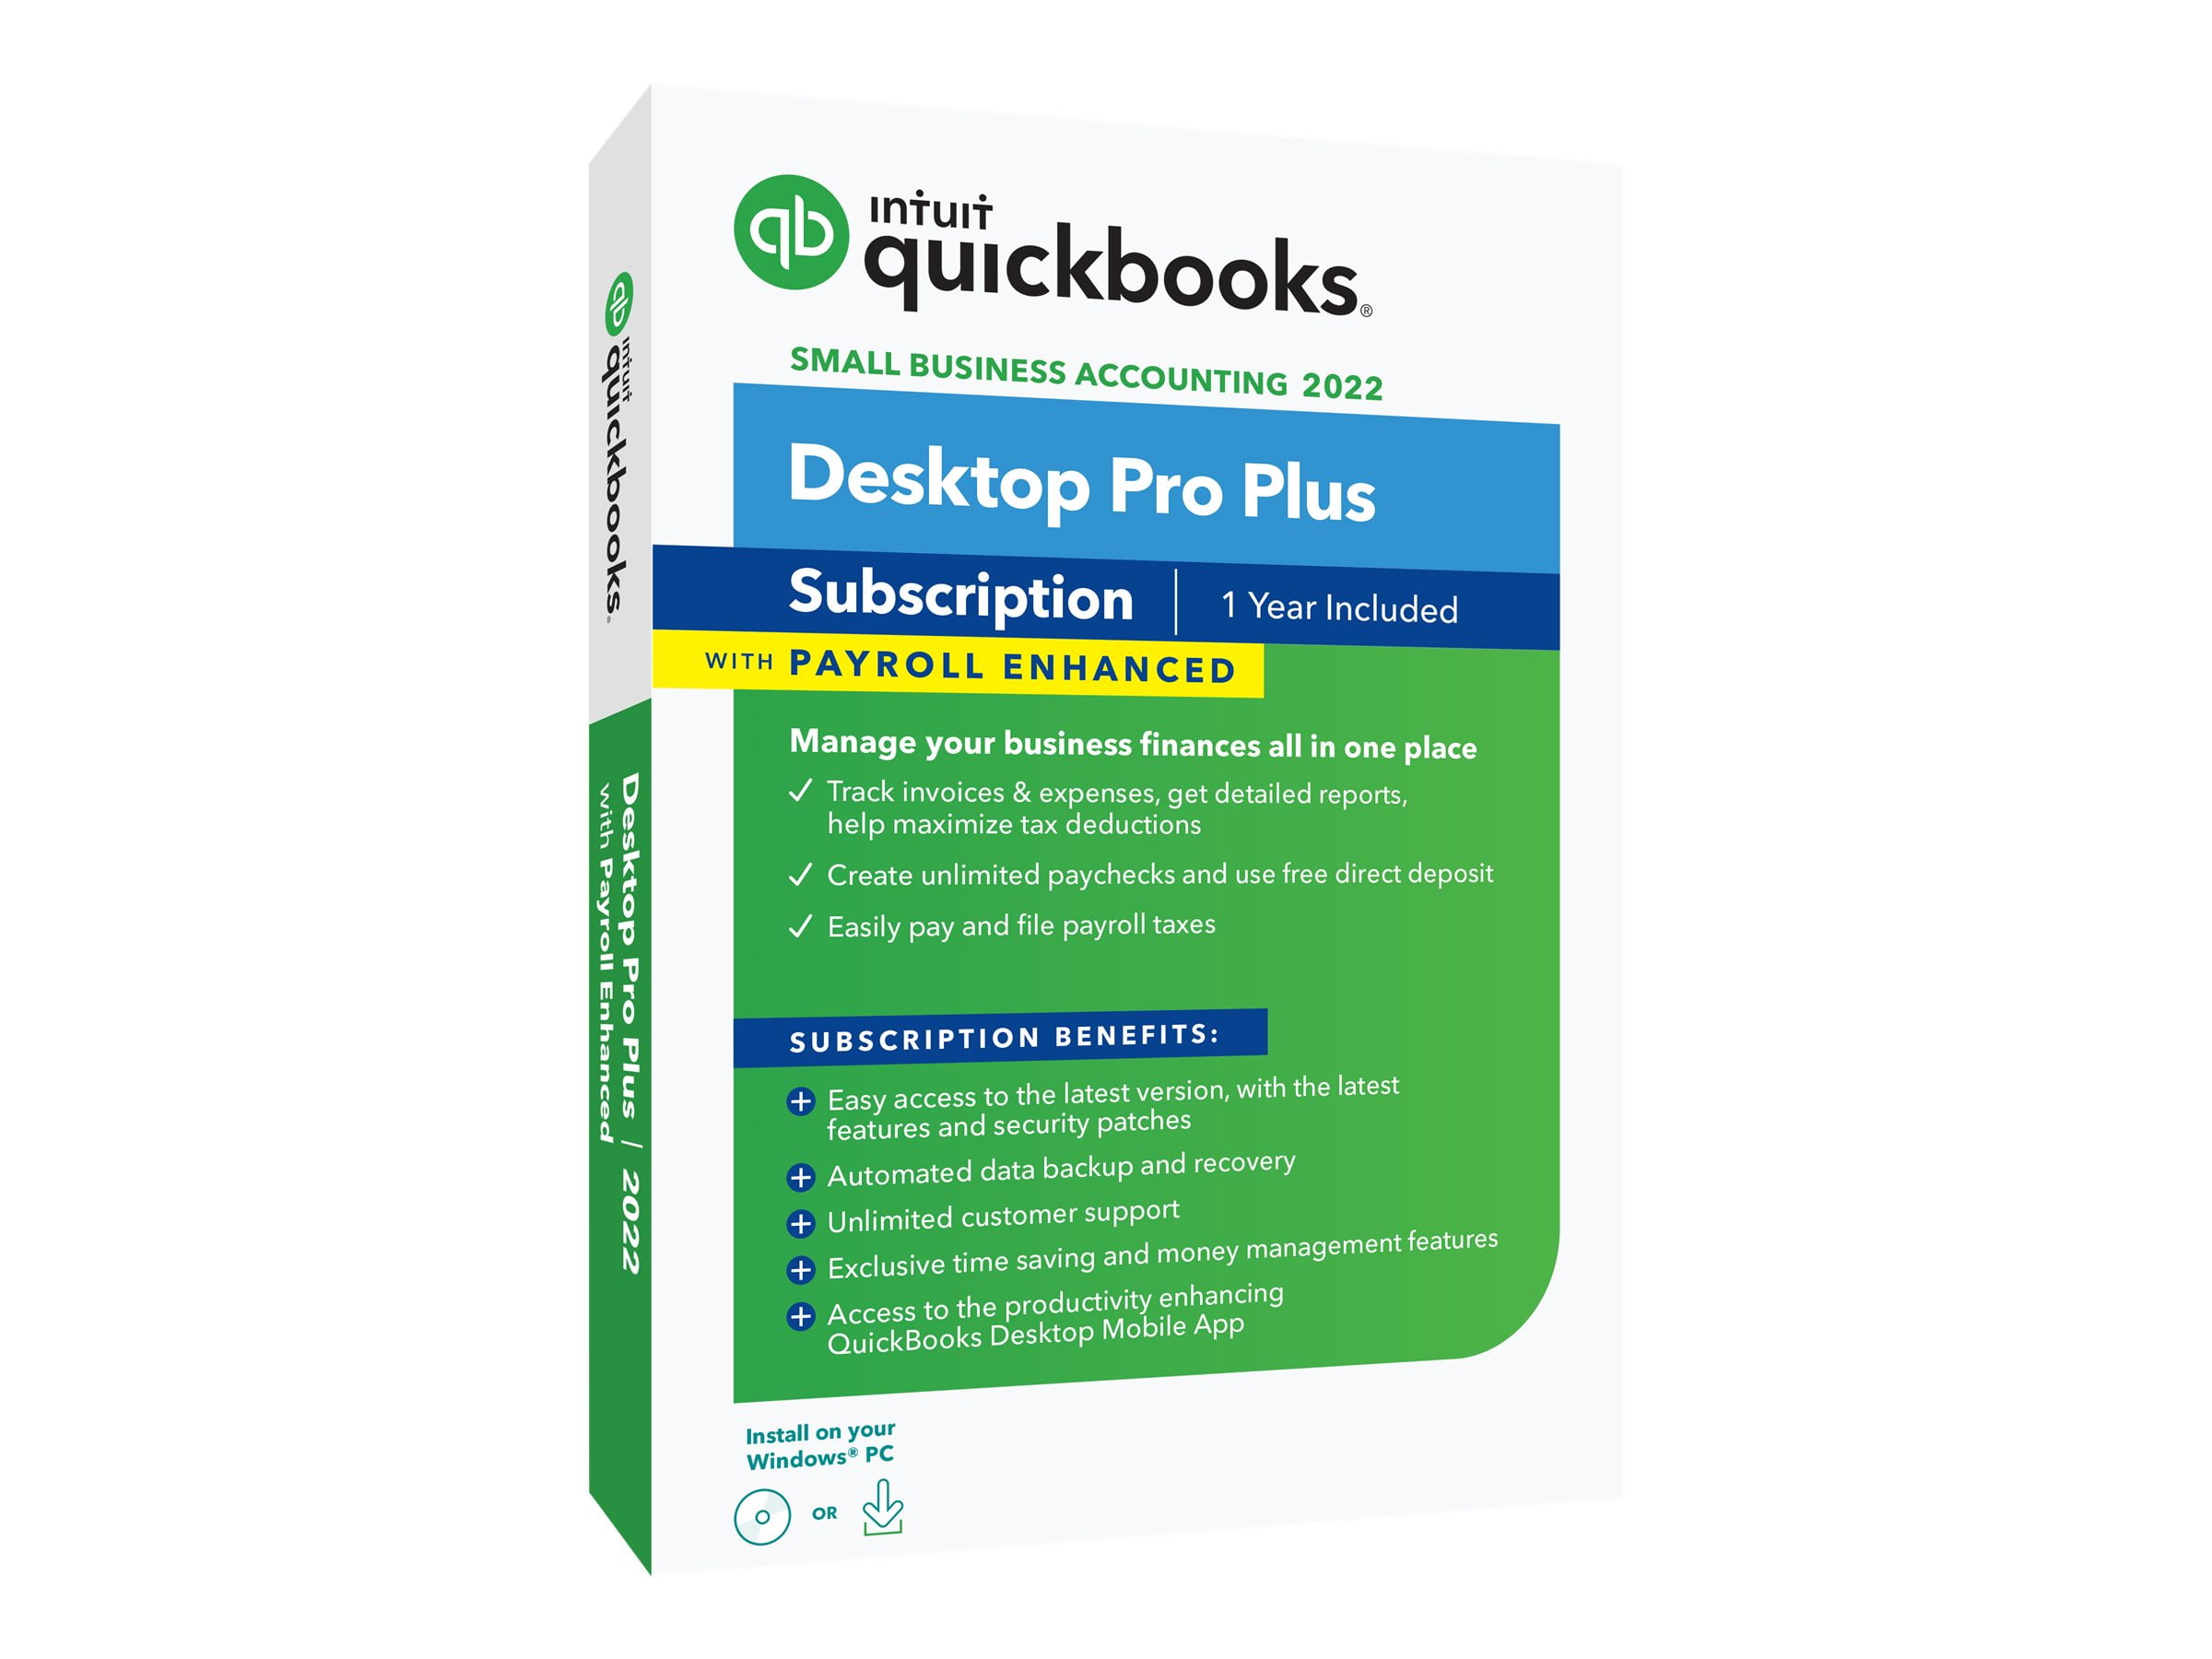 QUICKBOOKS DESKTOP Pro Plus with Enhanced Payroll